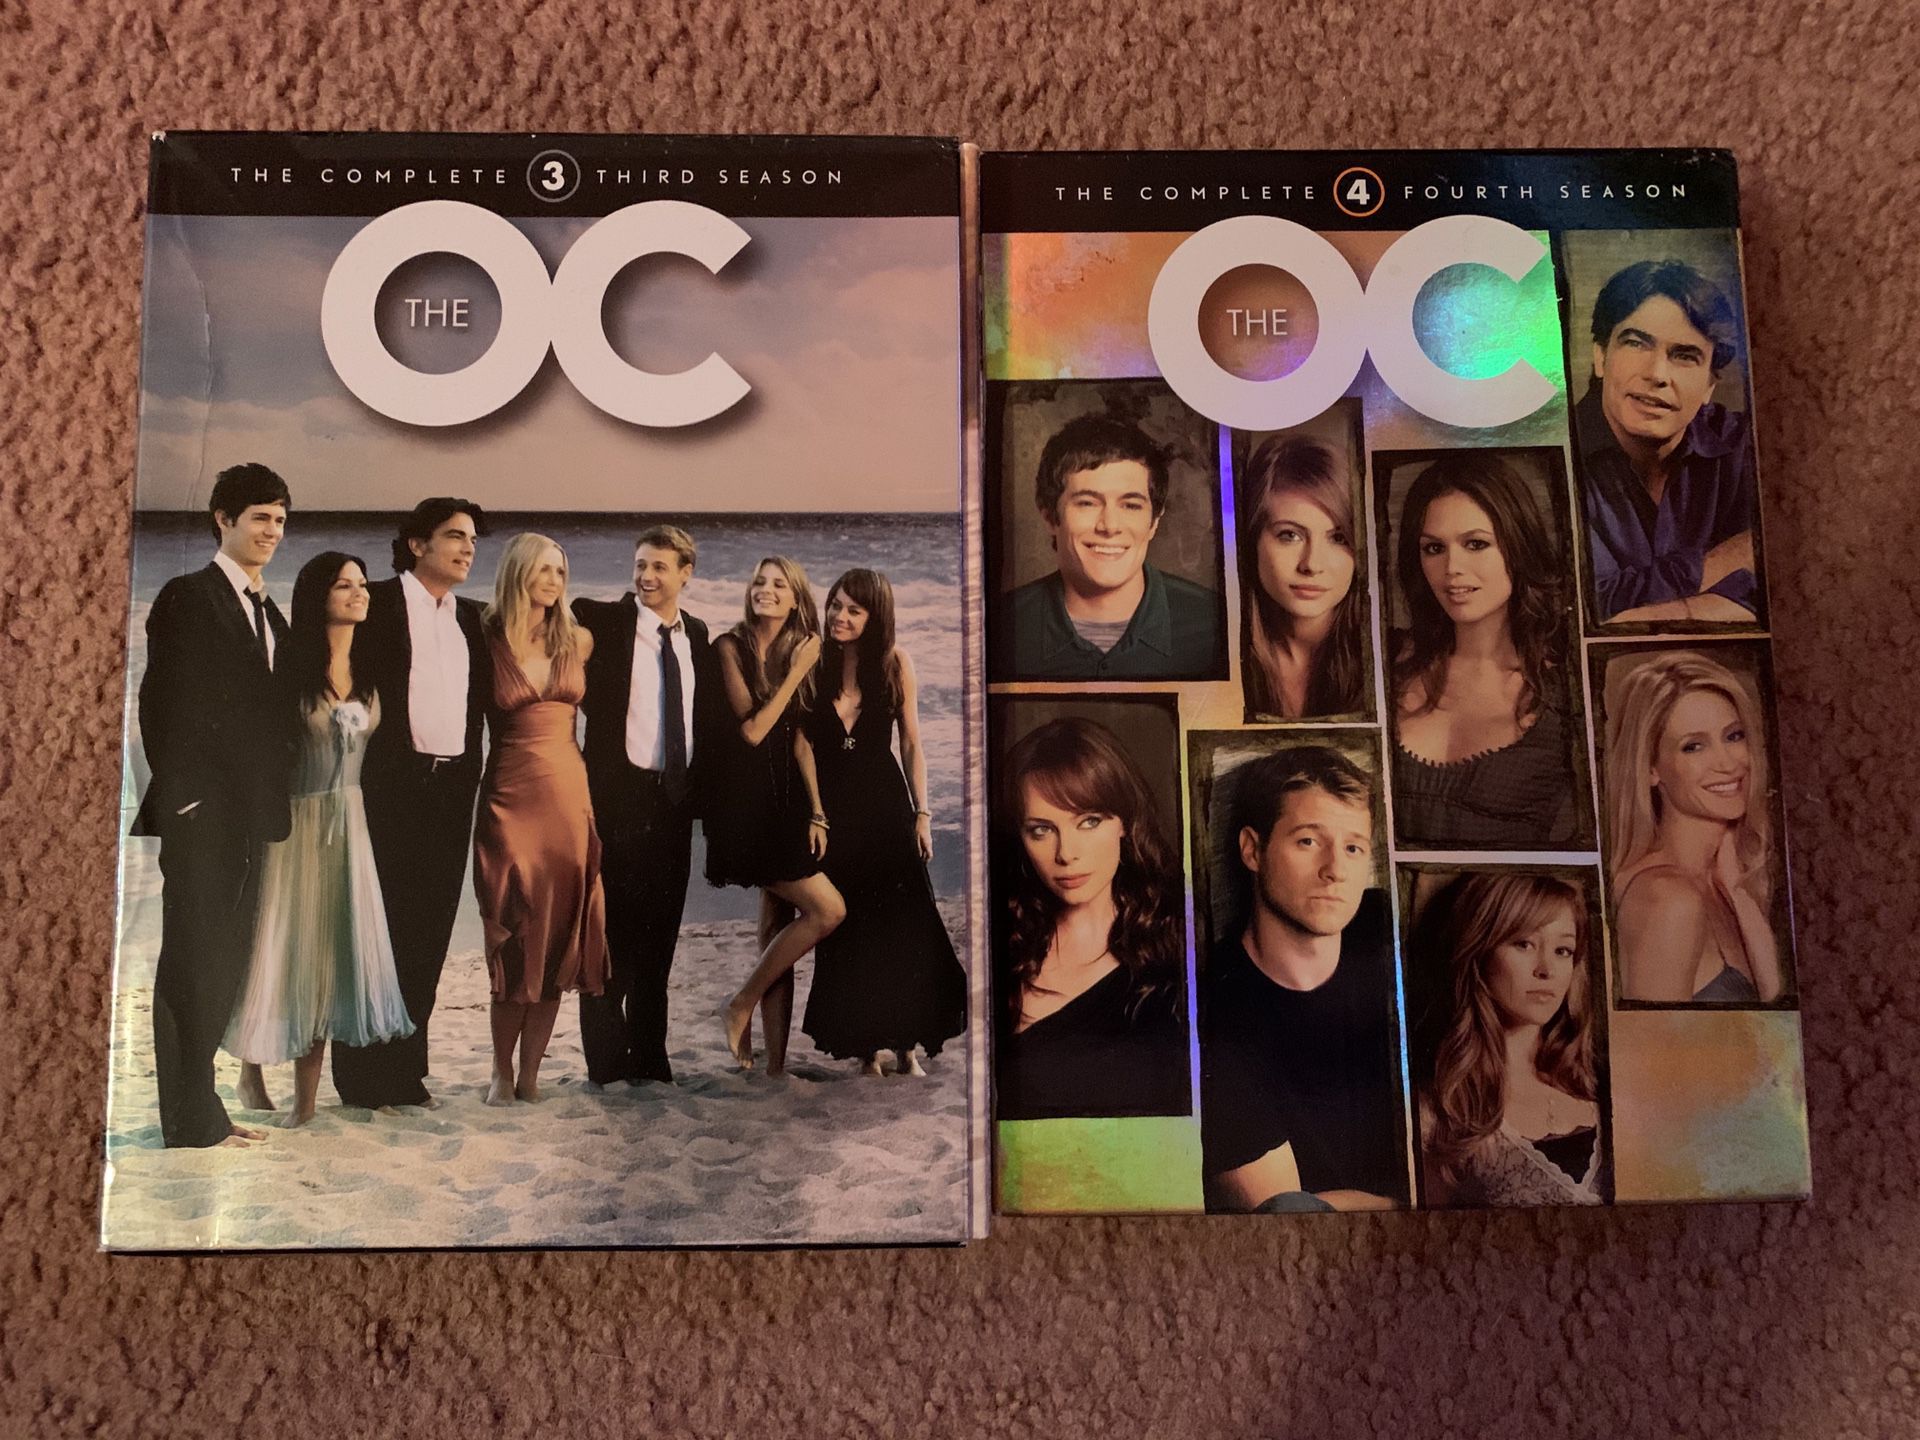 The OC season 3 & 4